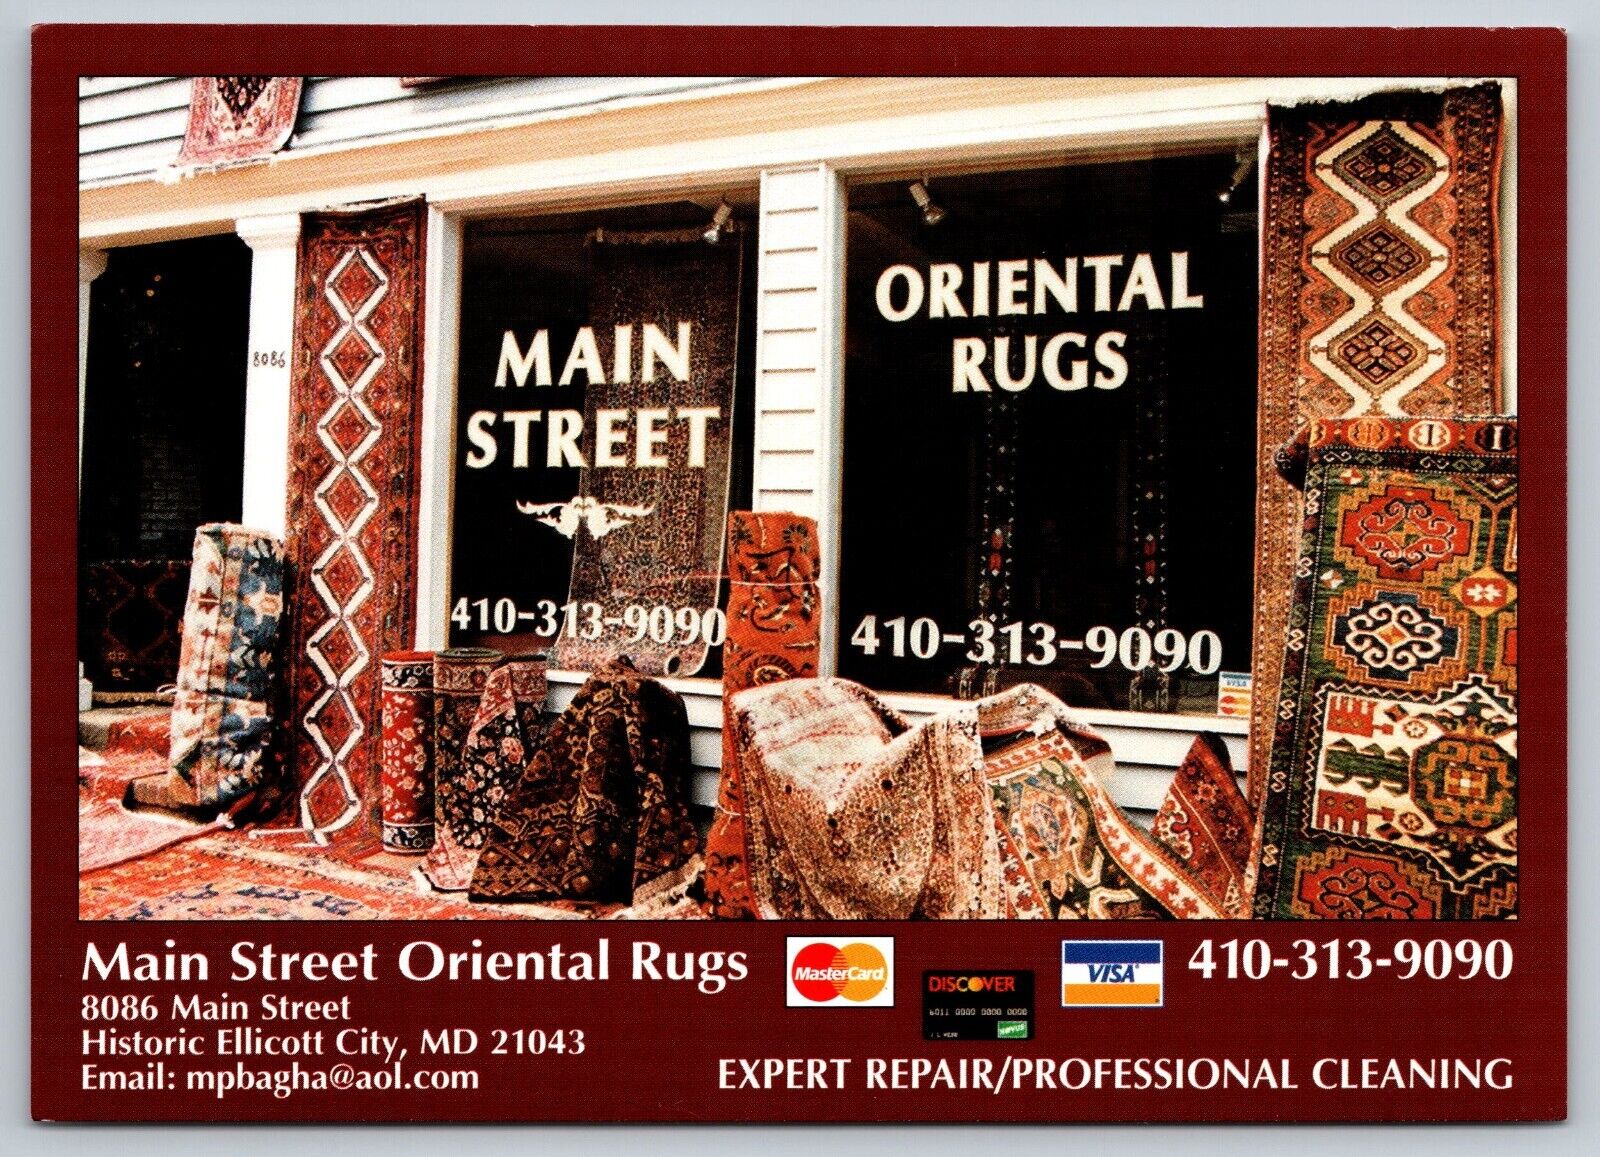 Postcard Maryland historic Ellicott City Main Street Oriental Rugs Advert 4D